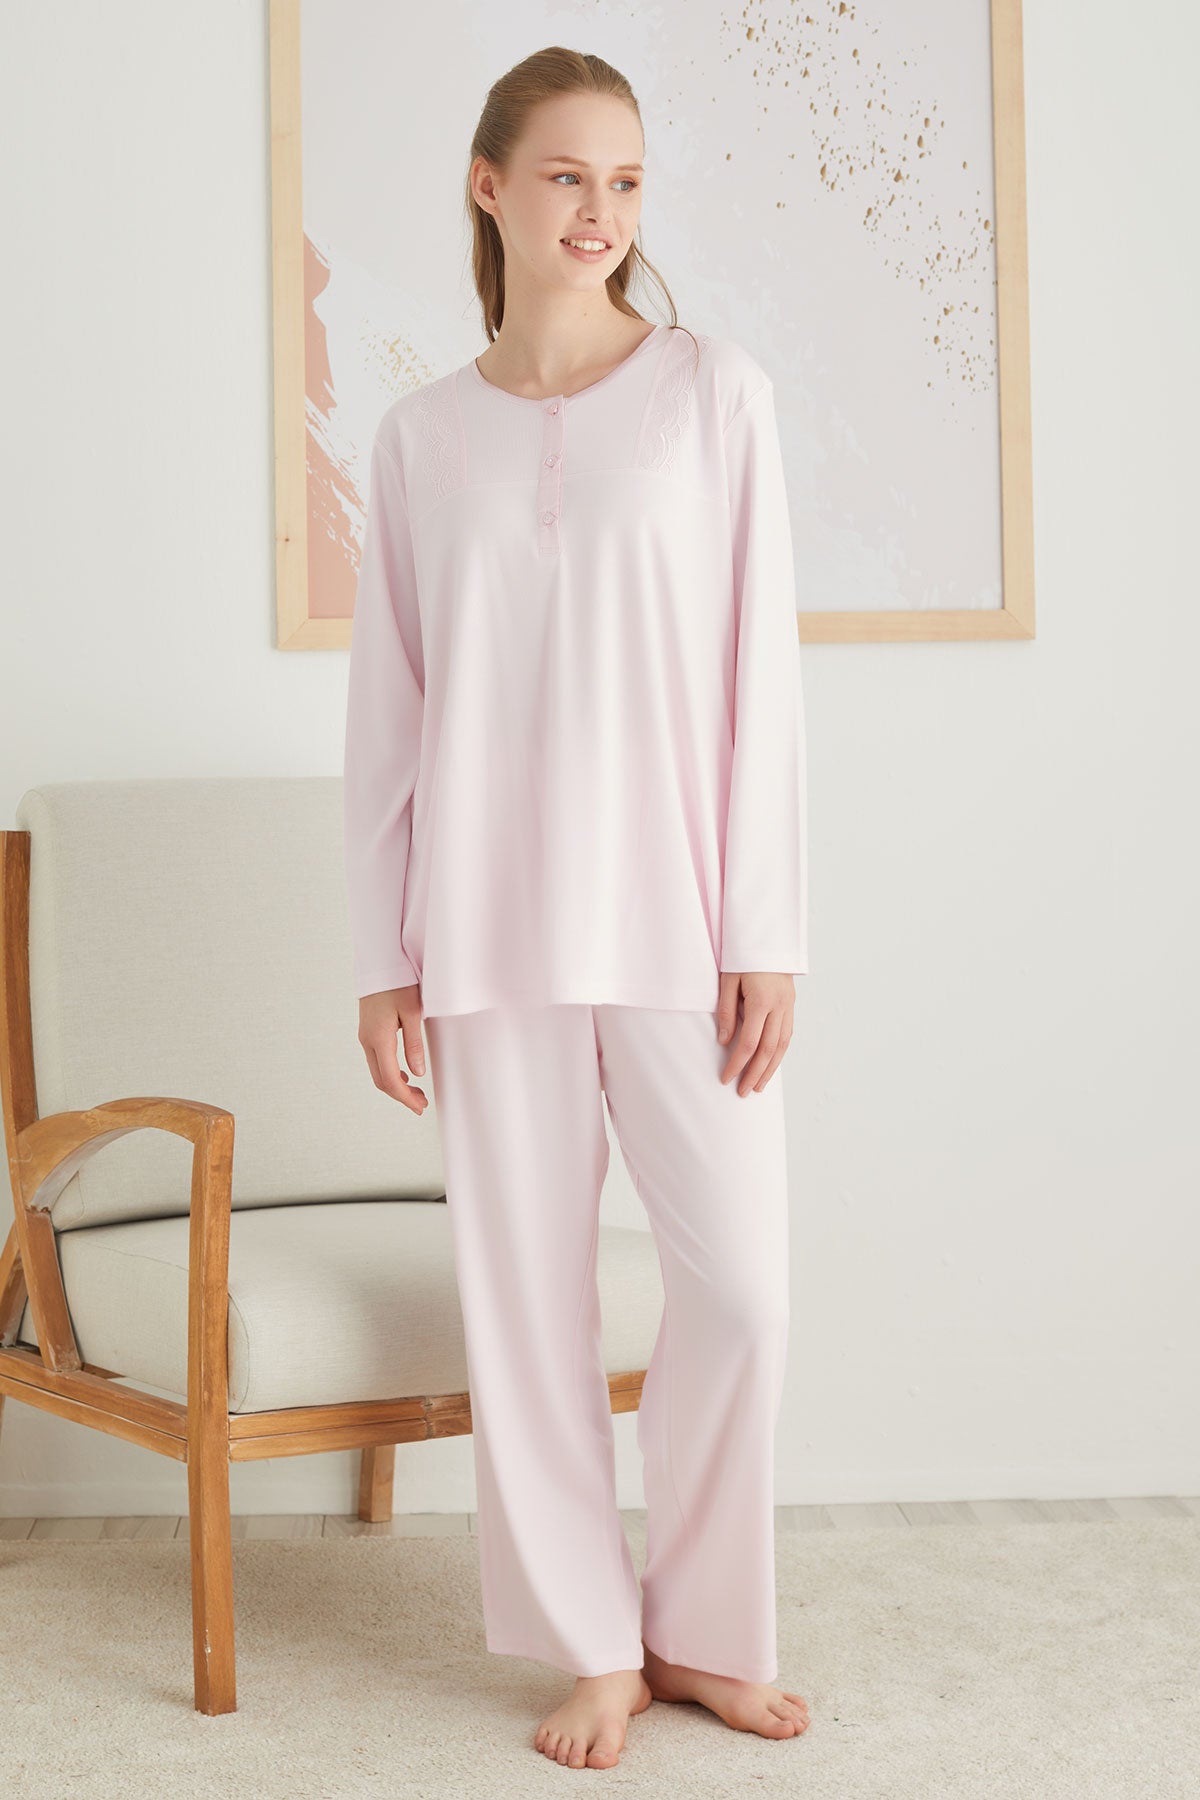 Shopymommy 2822 Guipure Collar Plus Size Maternity & Nursing Pajamas Pink